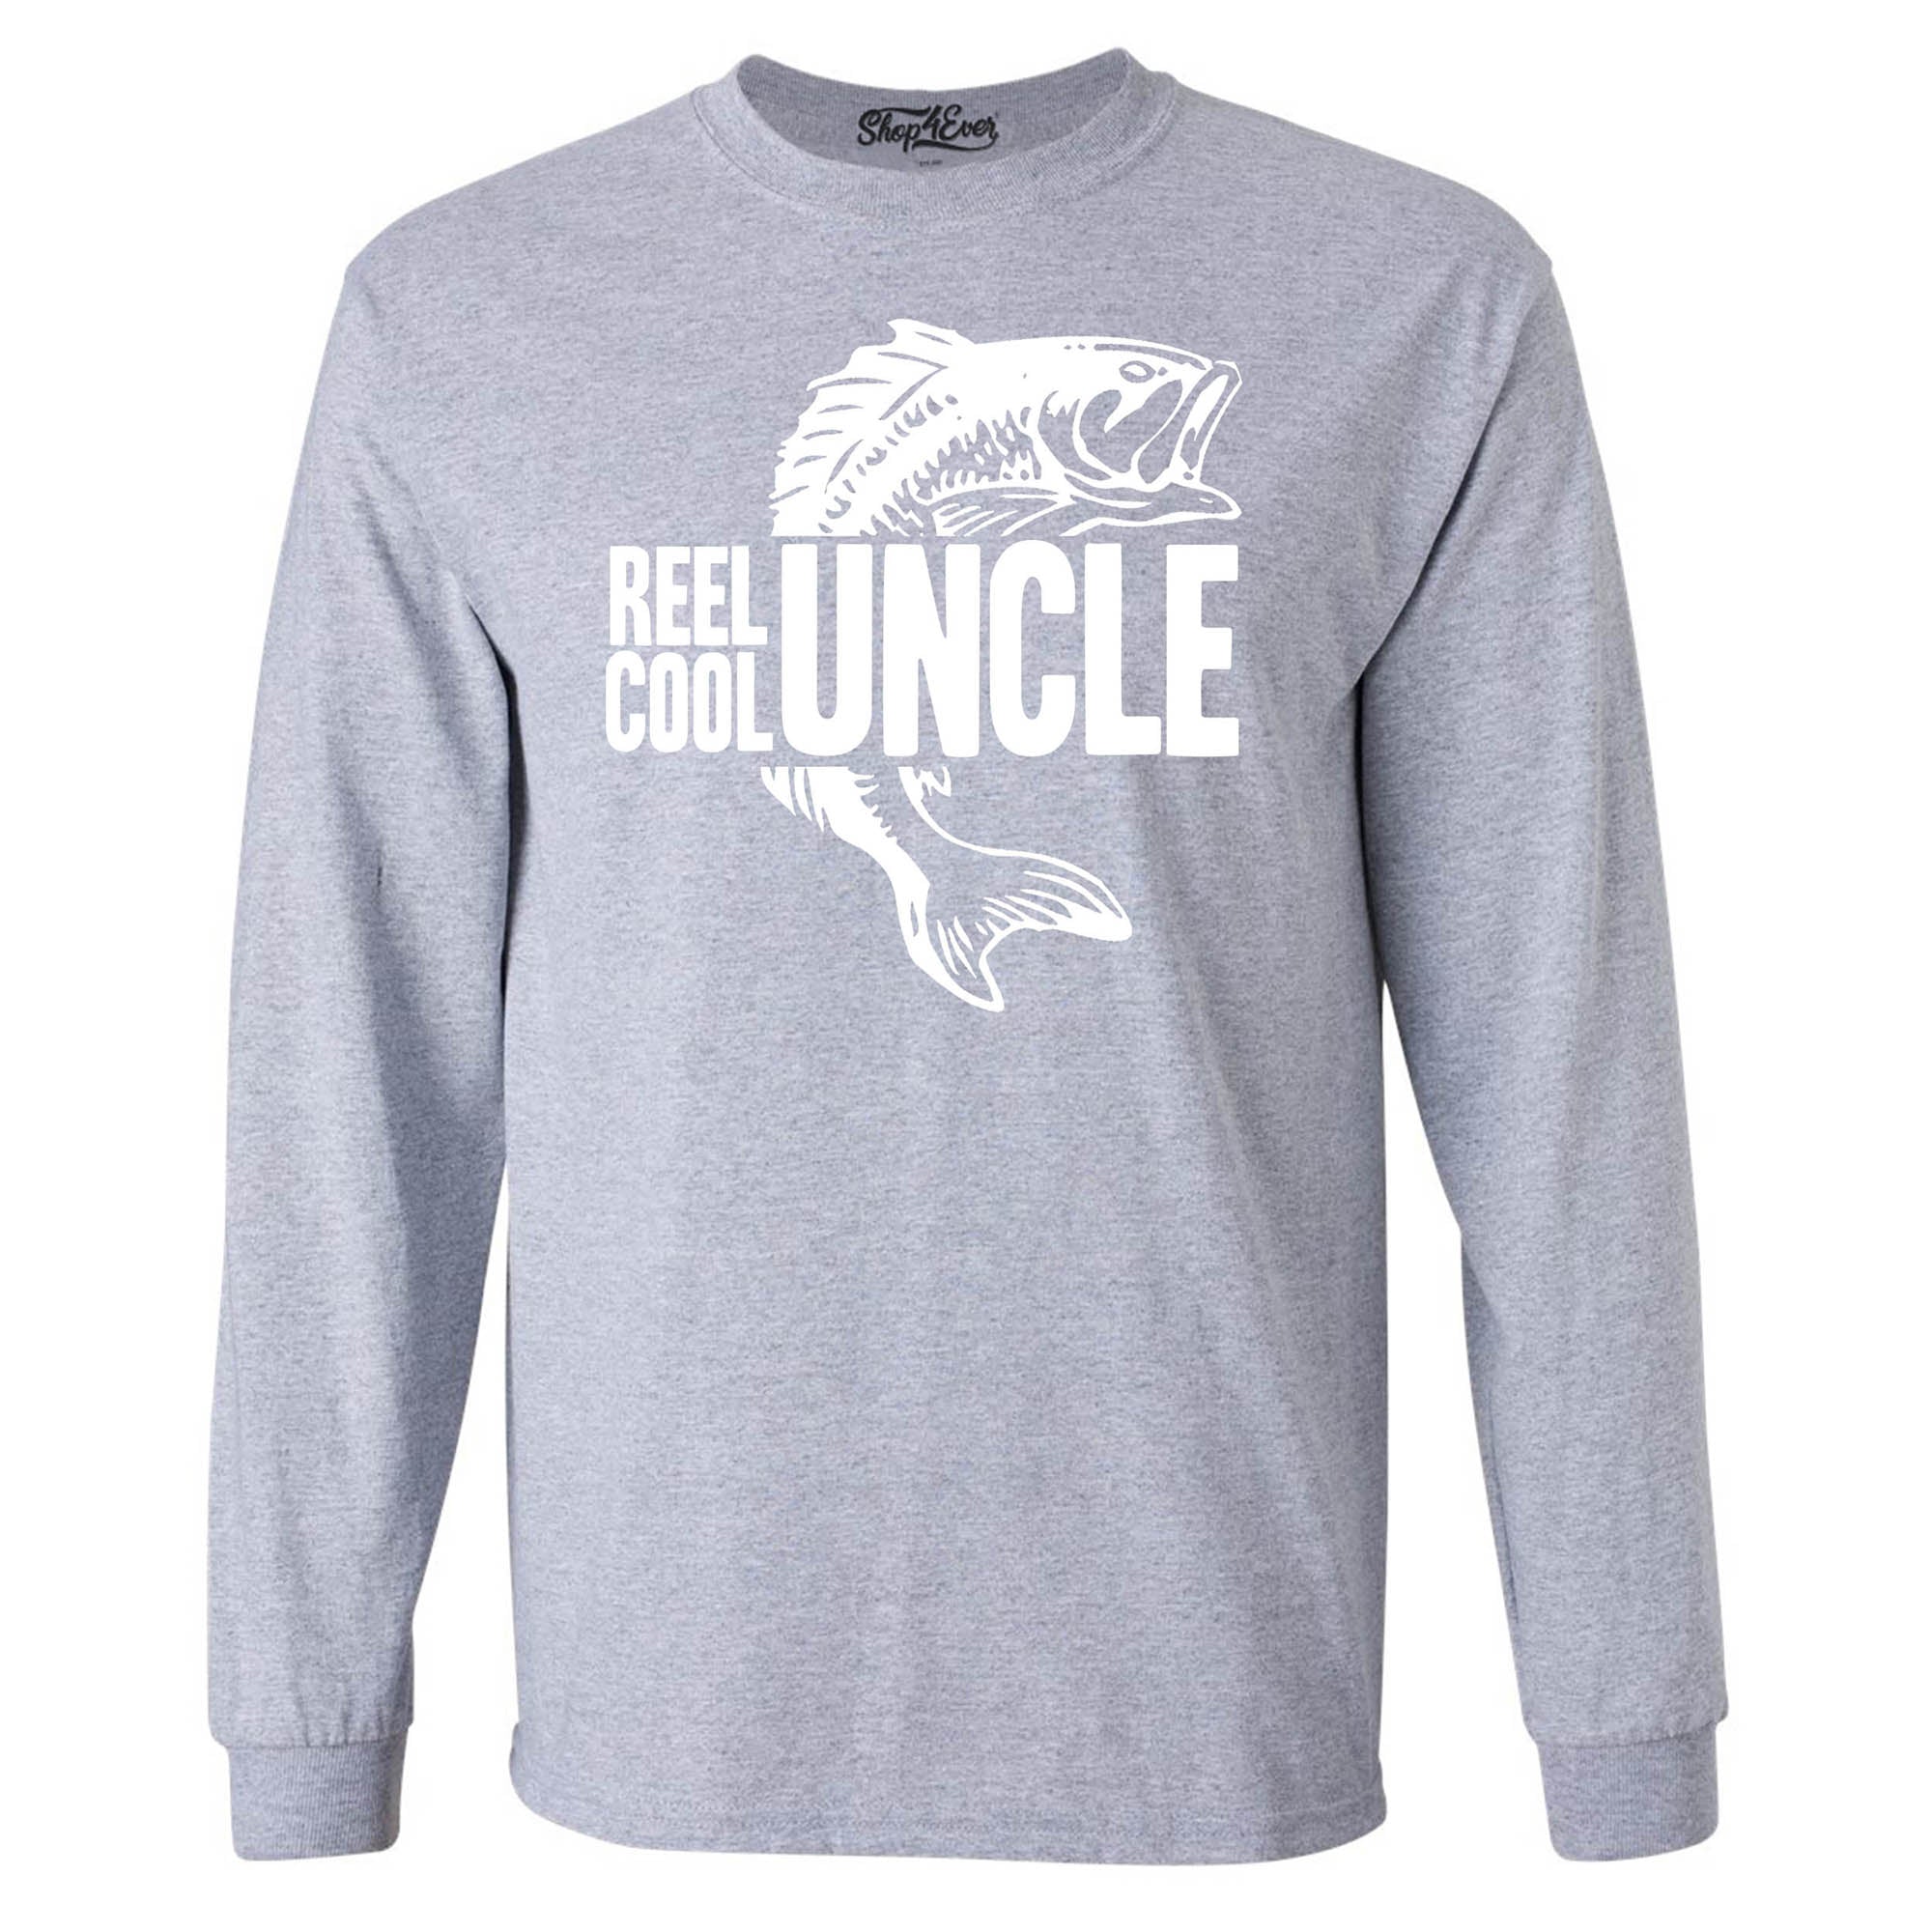 Reel Cool Uncle Fishing Lake Long Sleeve Shirt